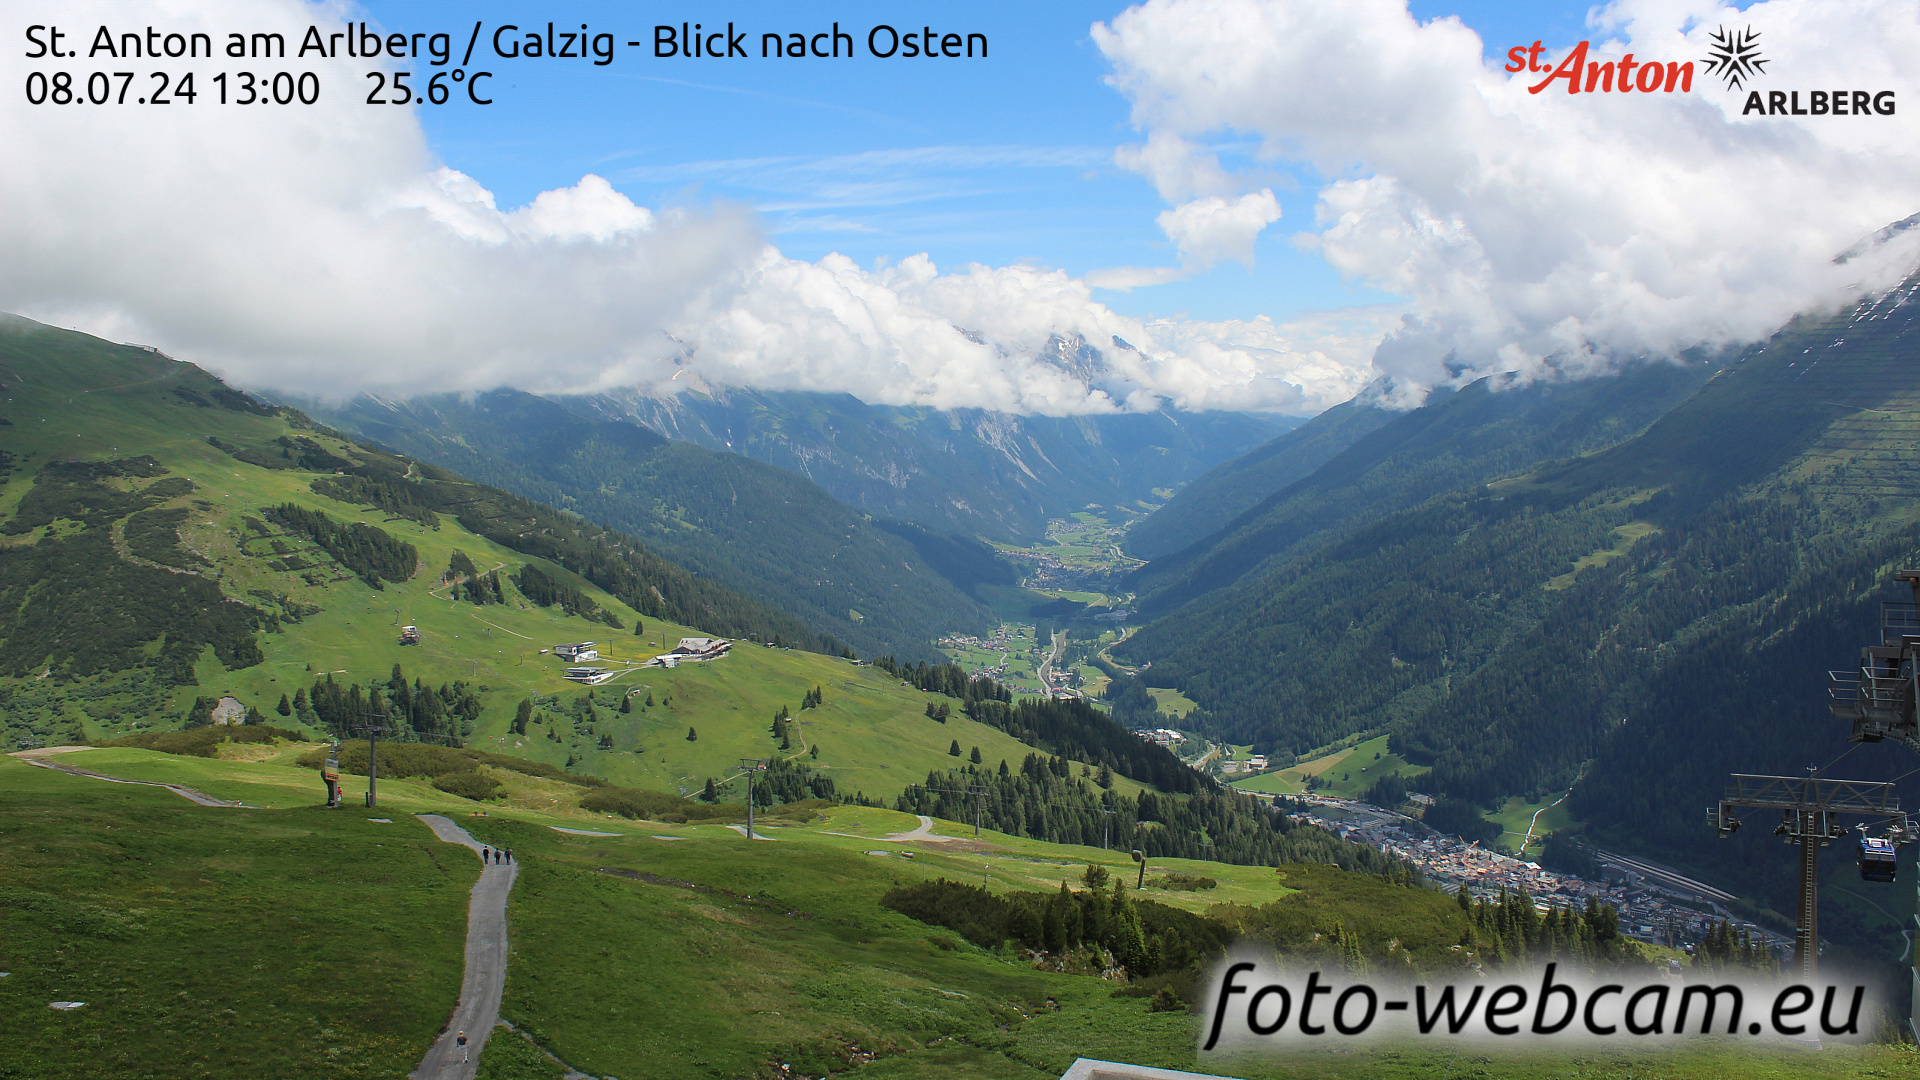 St. Anton am Arlberg Thu. 13:01